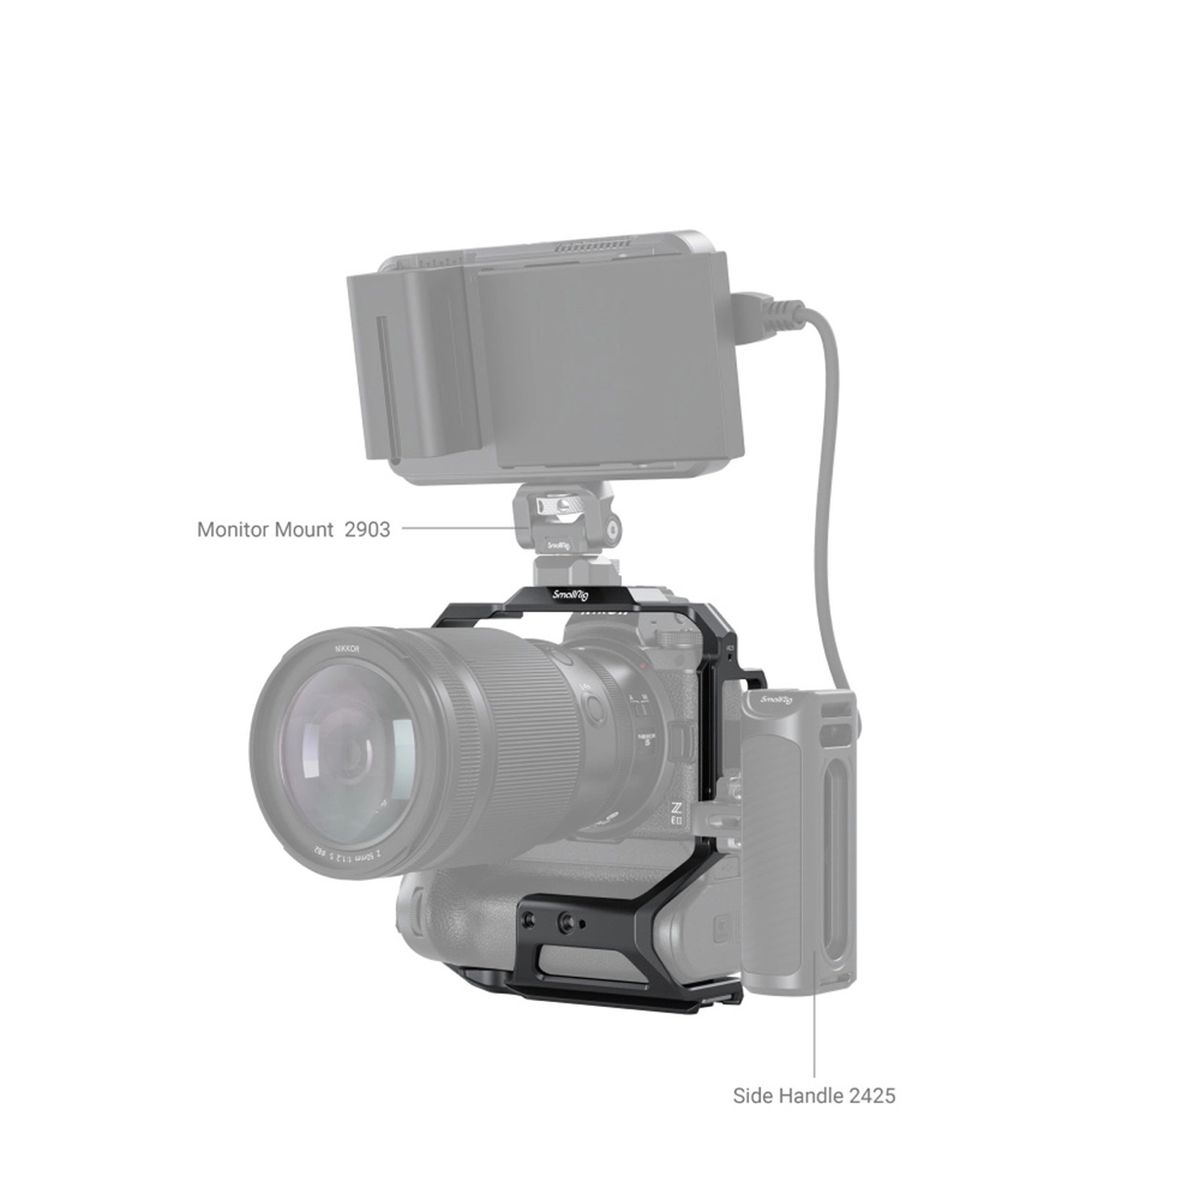 SmallRig 3866 Kamera Cage für Nikon Z 6II/Z 7II mit MB-N11 Akku-Griff